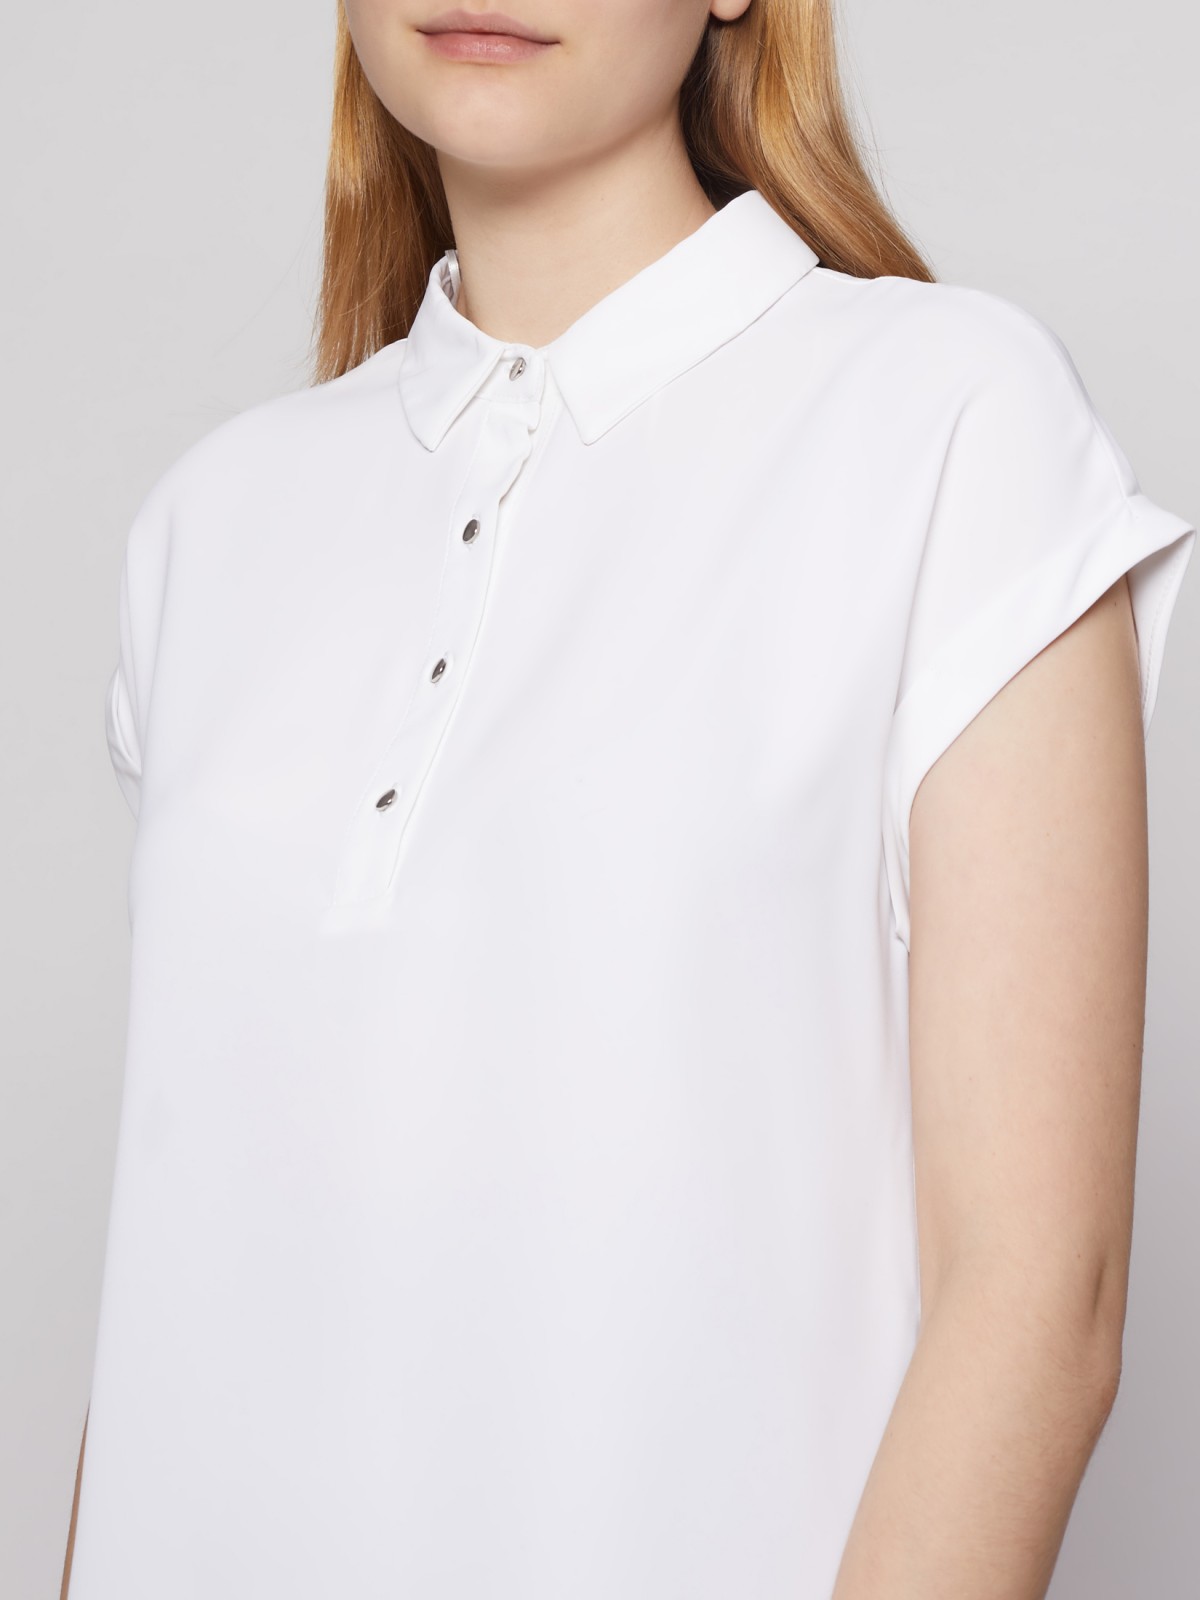 Блузка с коротким рукавом zolla 22213128Y012, цвет белый, размер XS - фото 3